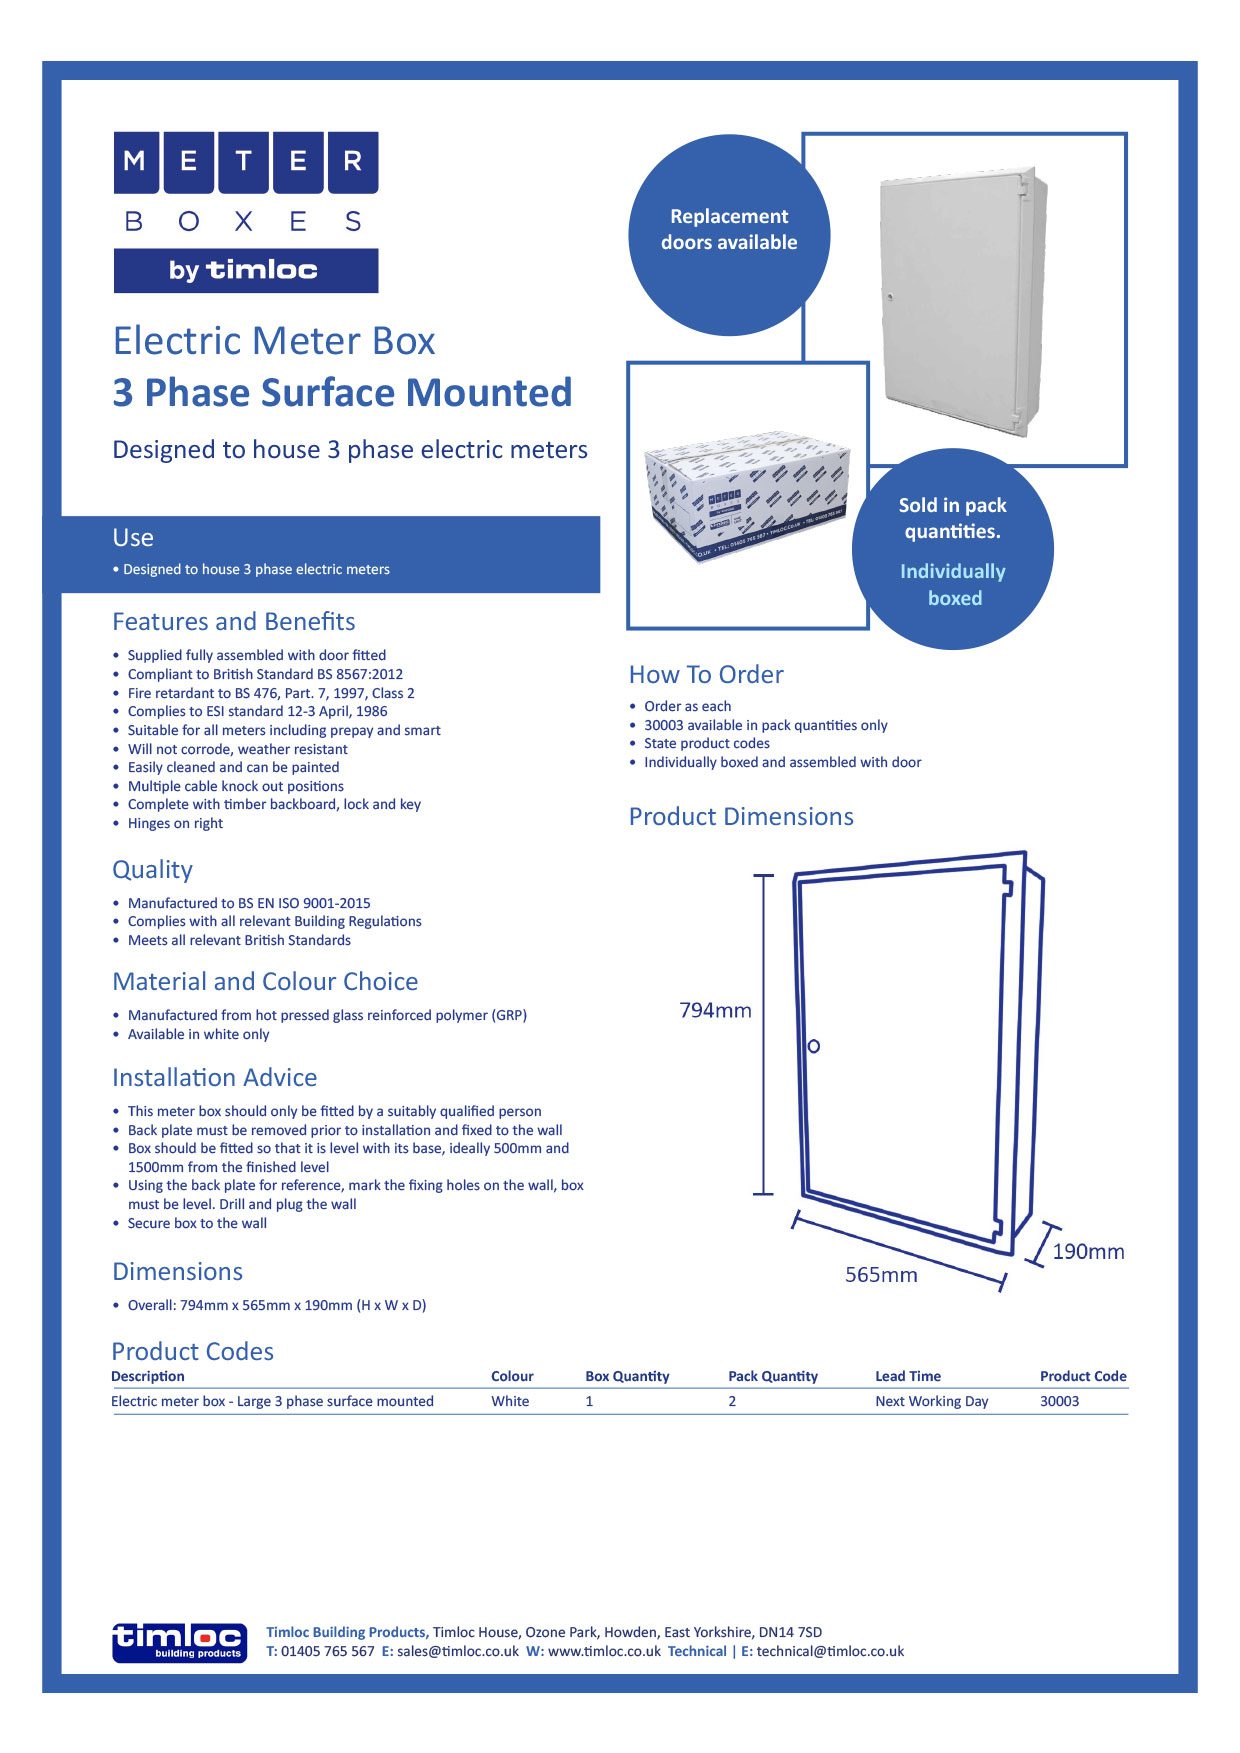 Timloc Building Products Datasheet - Universal Slate Ventilator